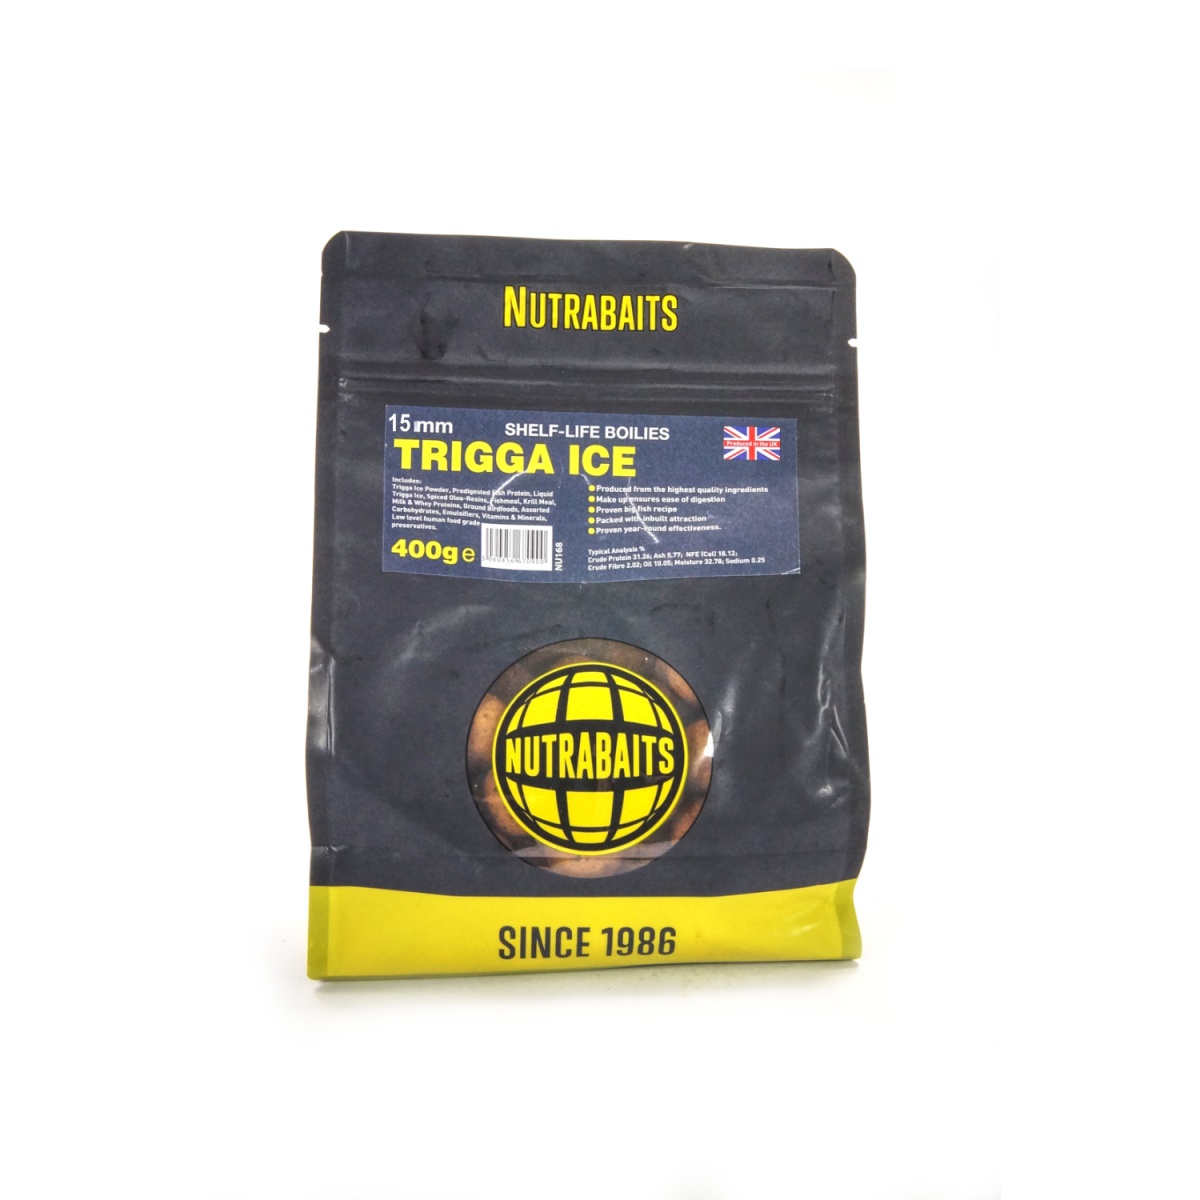 Nutrabaits Trigga Ice Shelf Life Boilies 15mm / 400g rozmiar/ opakowanie